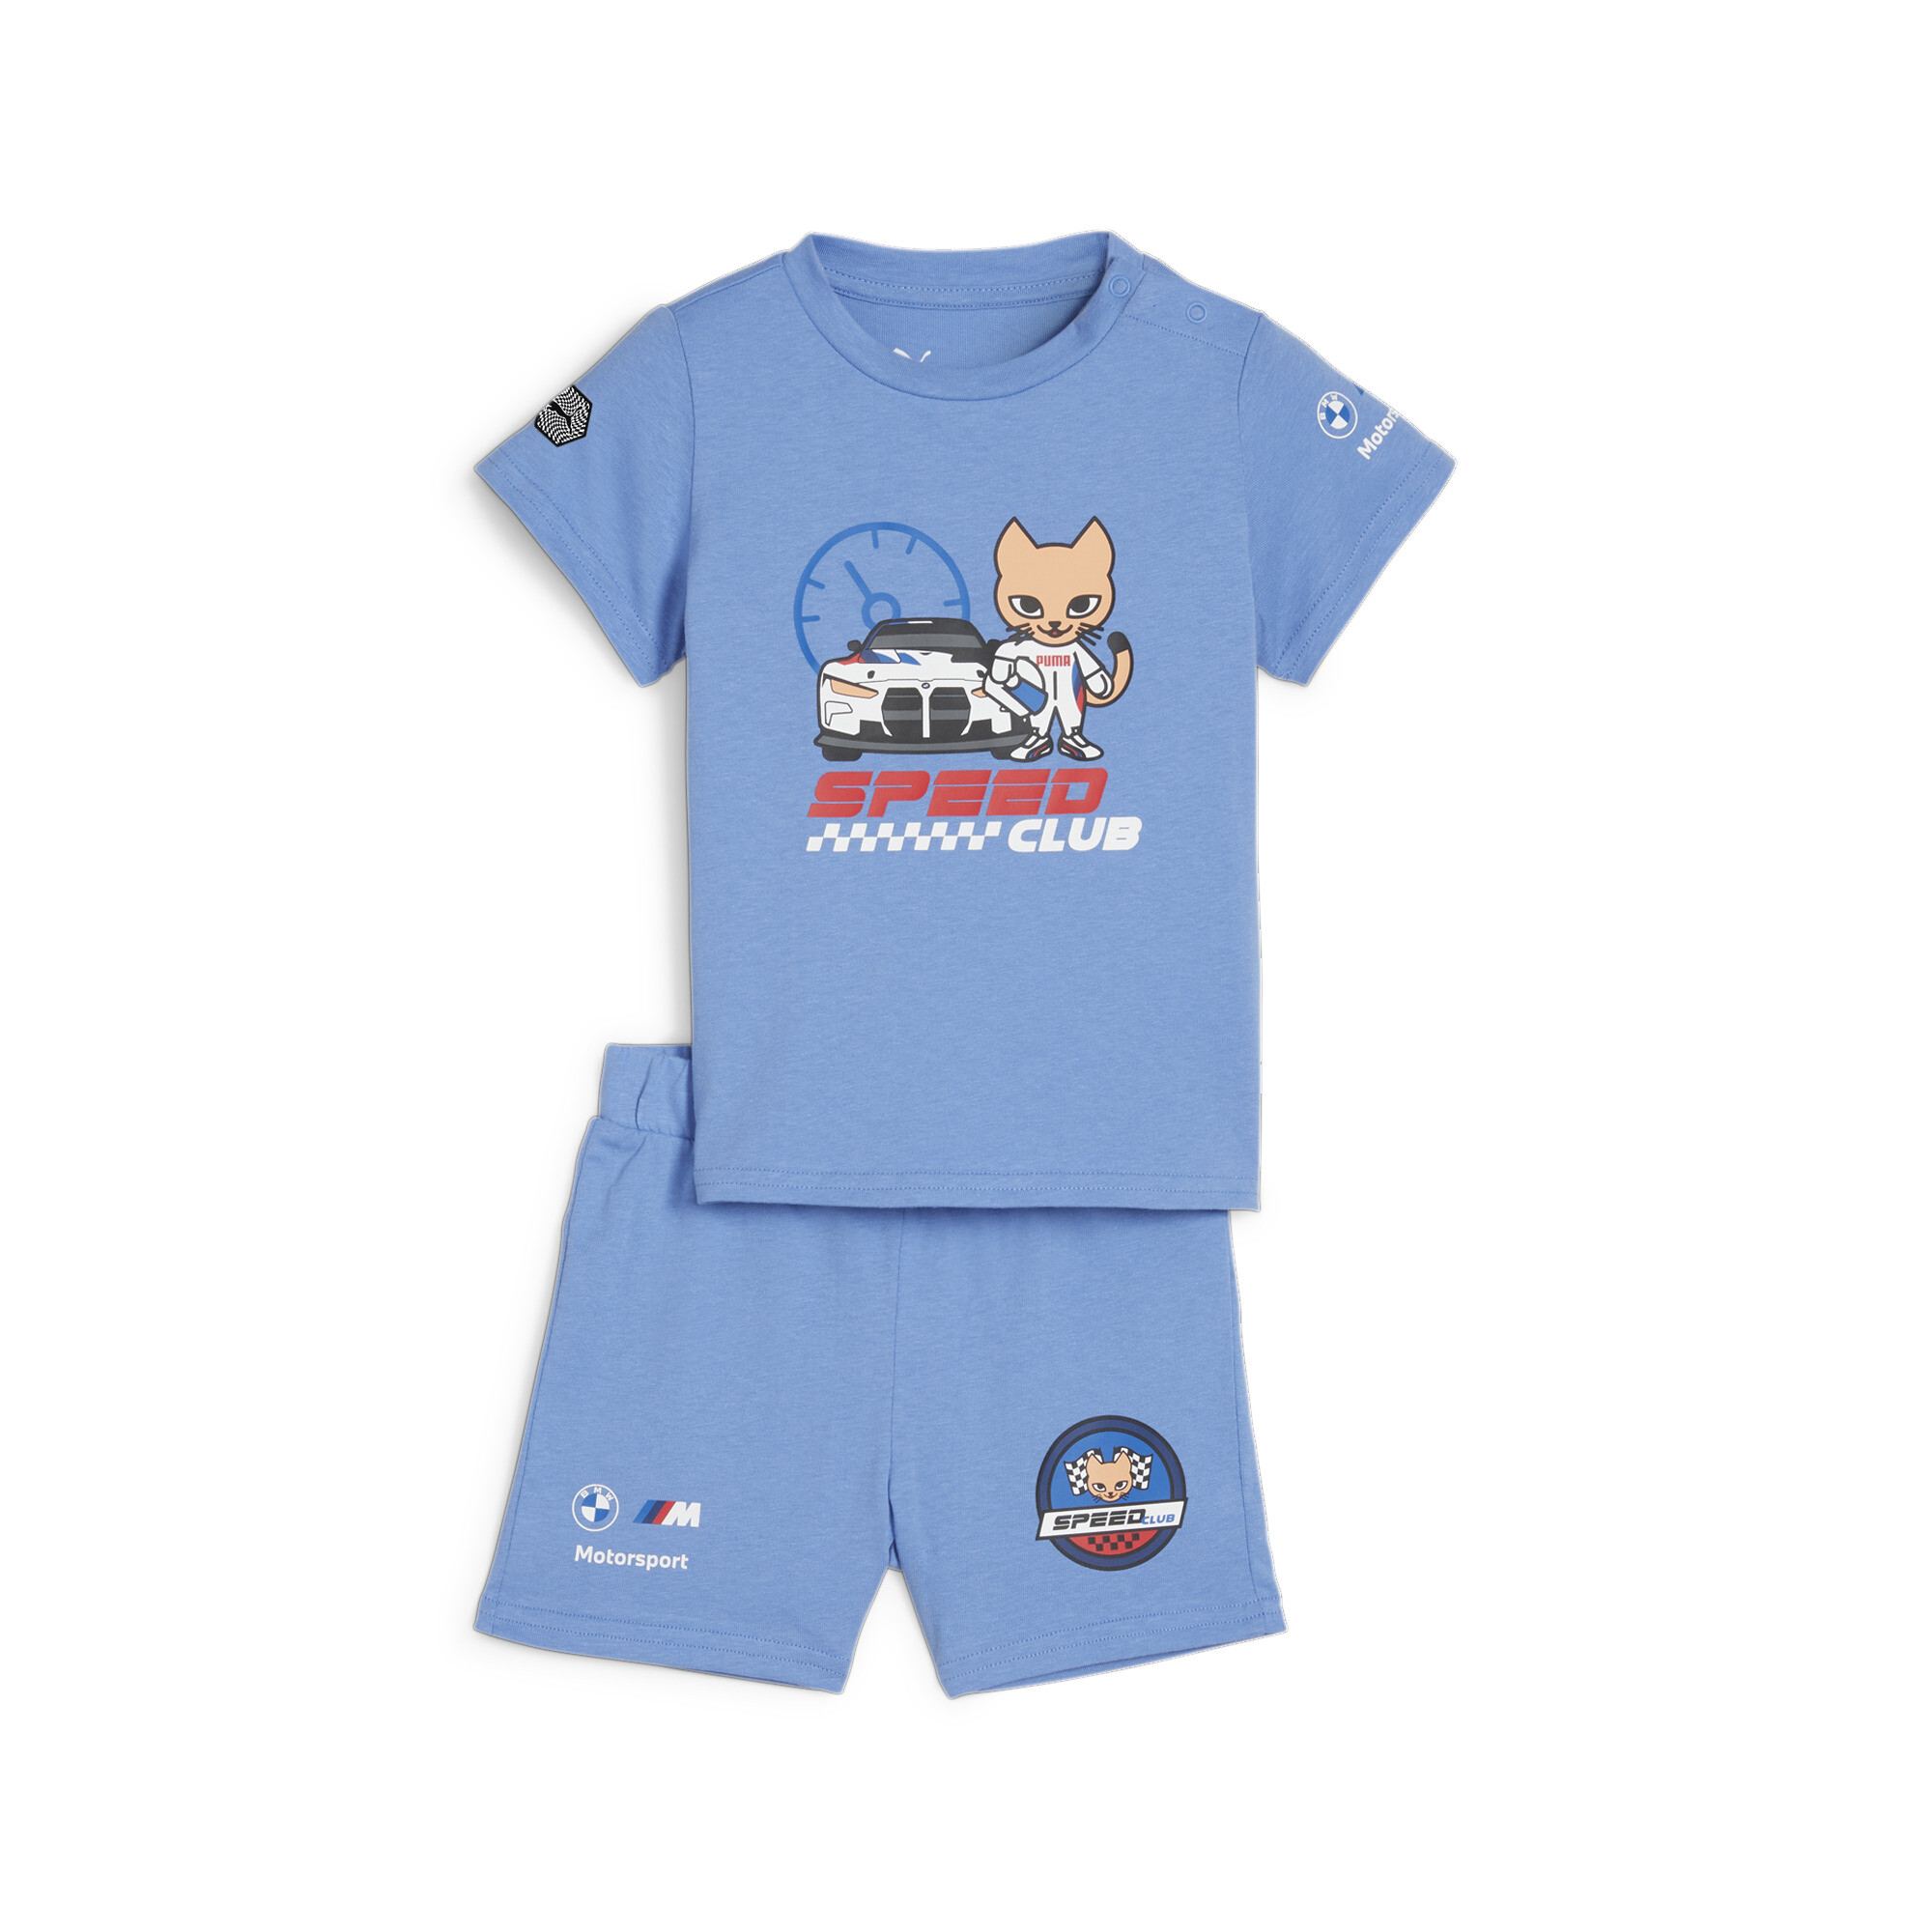 Puma BMW M Motorsport Toddlers' Set, Blue, Size 4-6M, Clothing